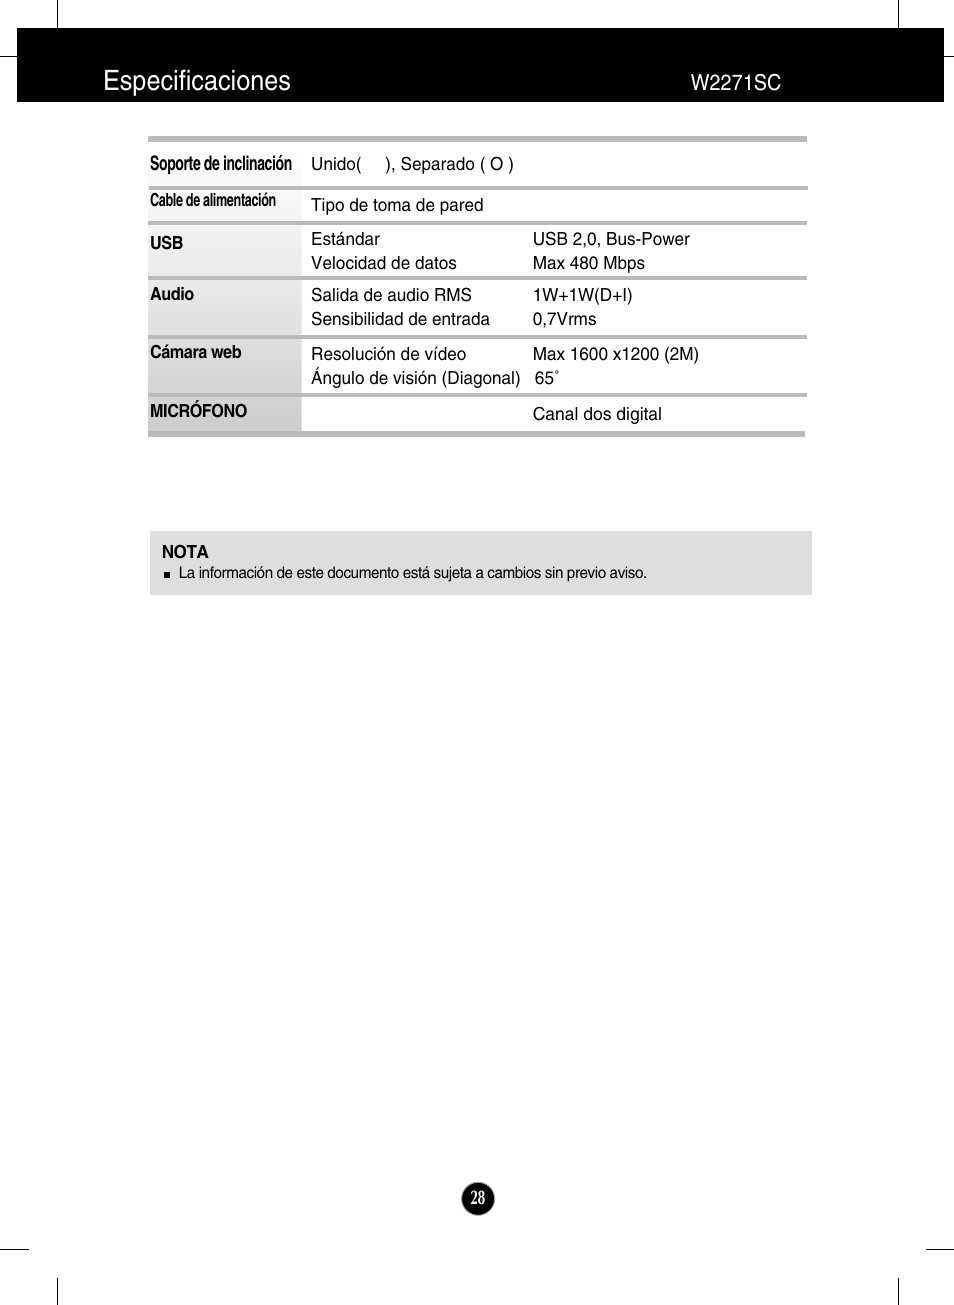 Especificaciones | LG W2271TC-PF Manual del usuario | Página 29 / 34